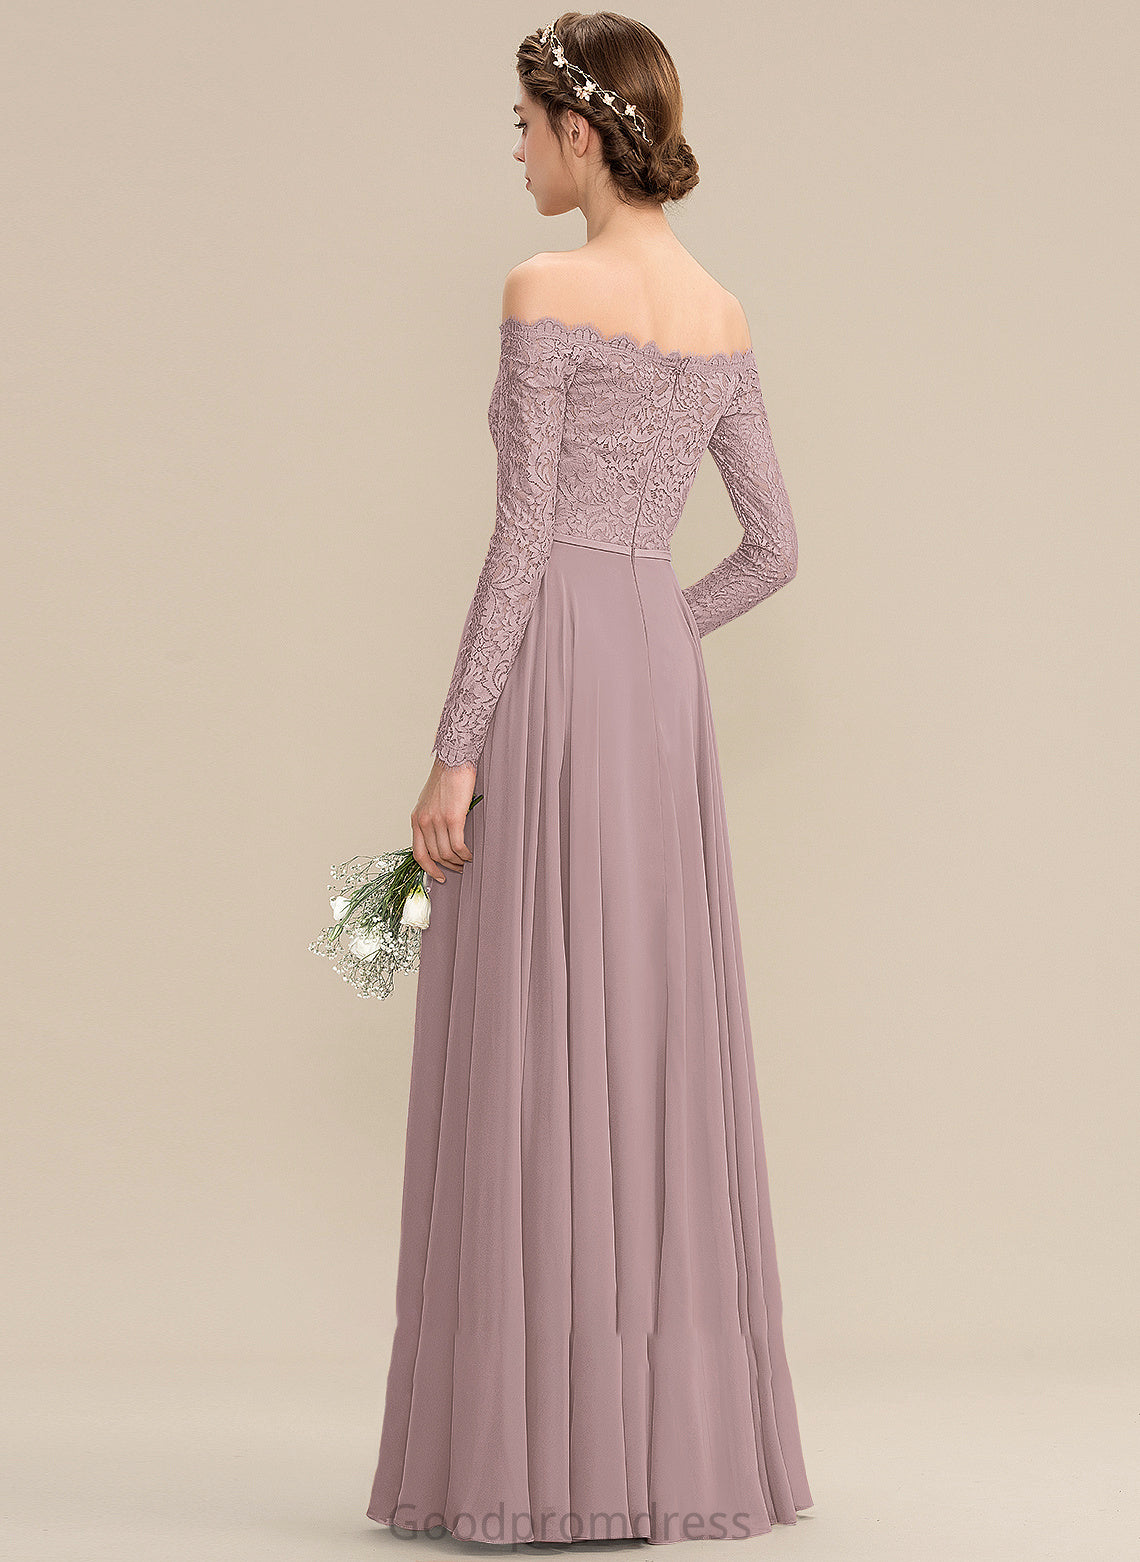 Length Floor-Length Off-the-Shoulder SplitFront Fabric Silhouette Neckline Embellishment A-Line Marley Scoop Natural Waist Bridesmaid Dresses